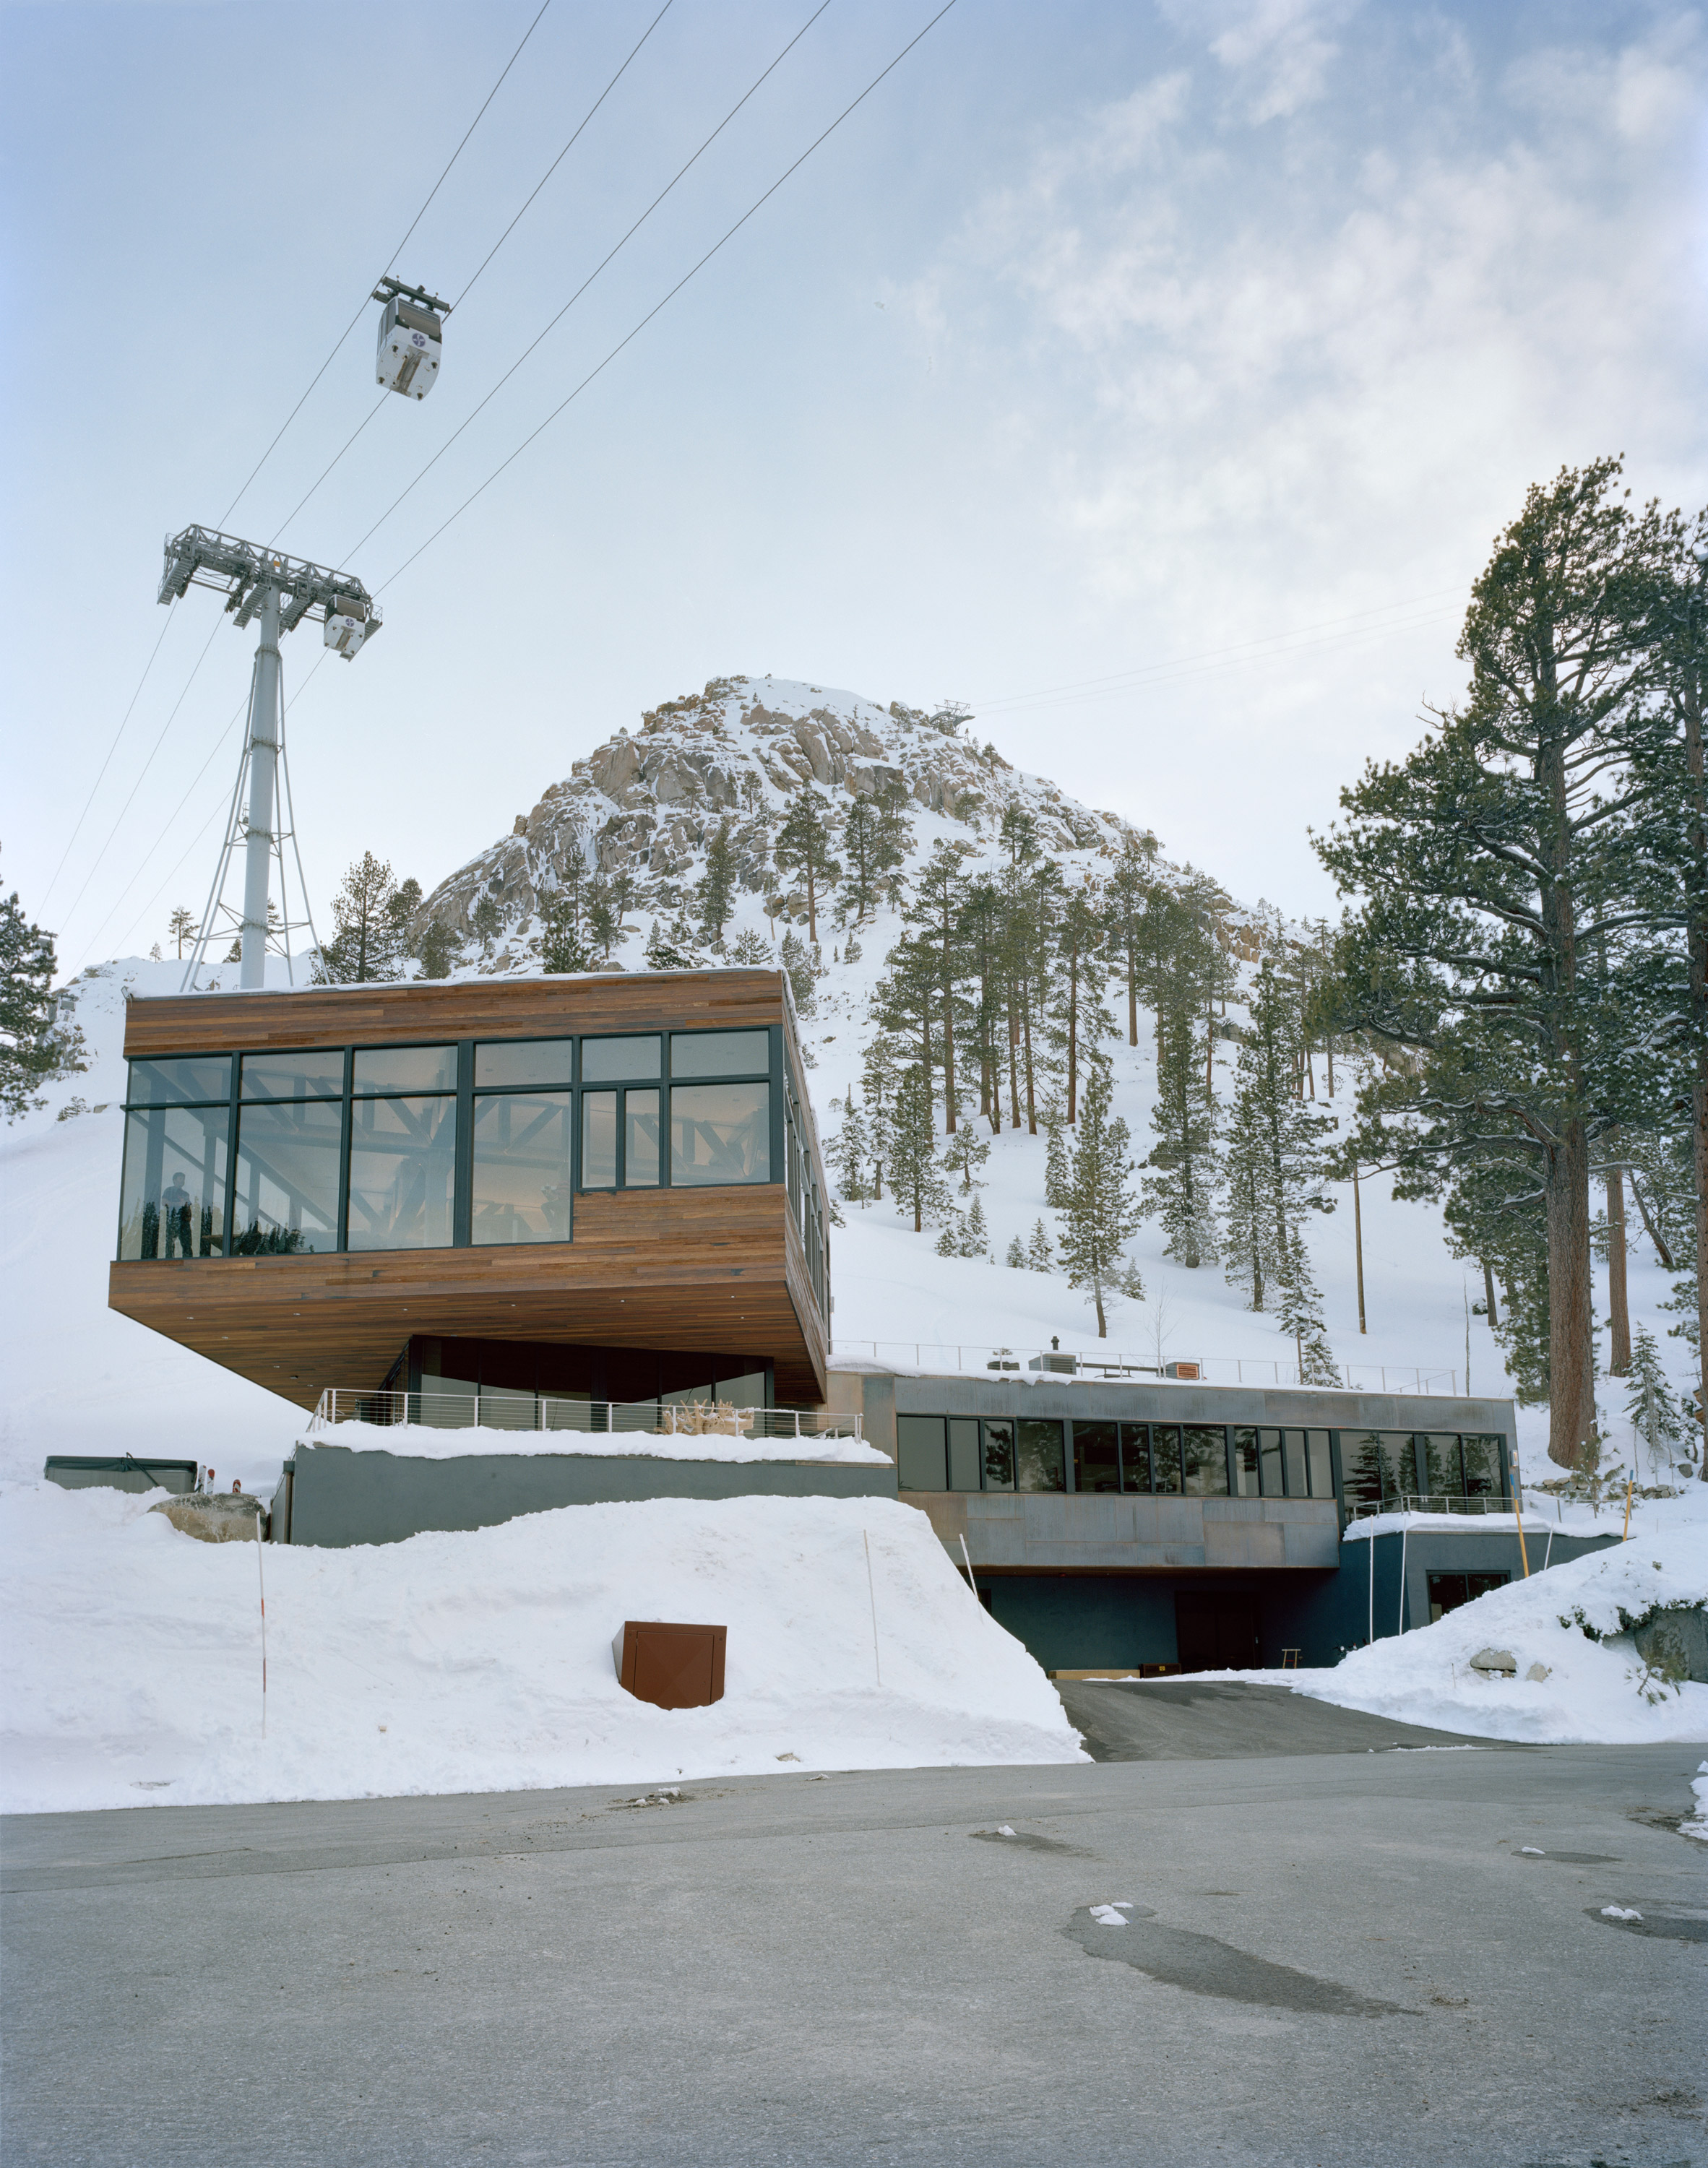 Ski On Home by Strawn Sierralta